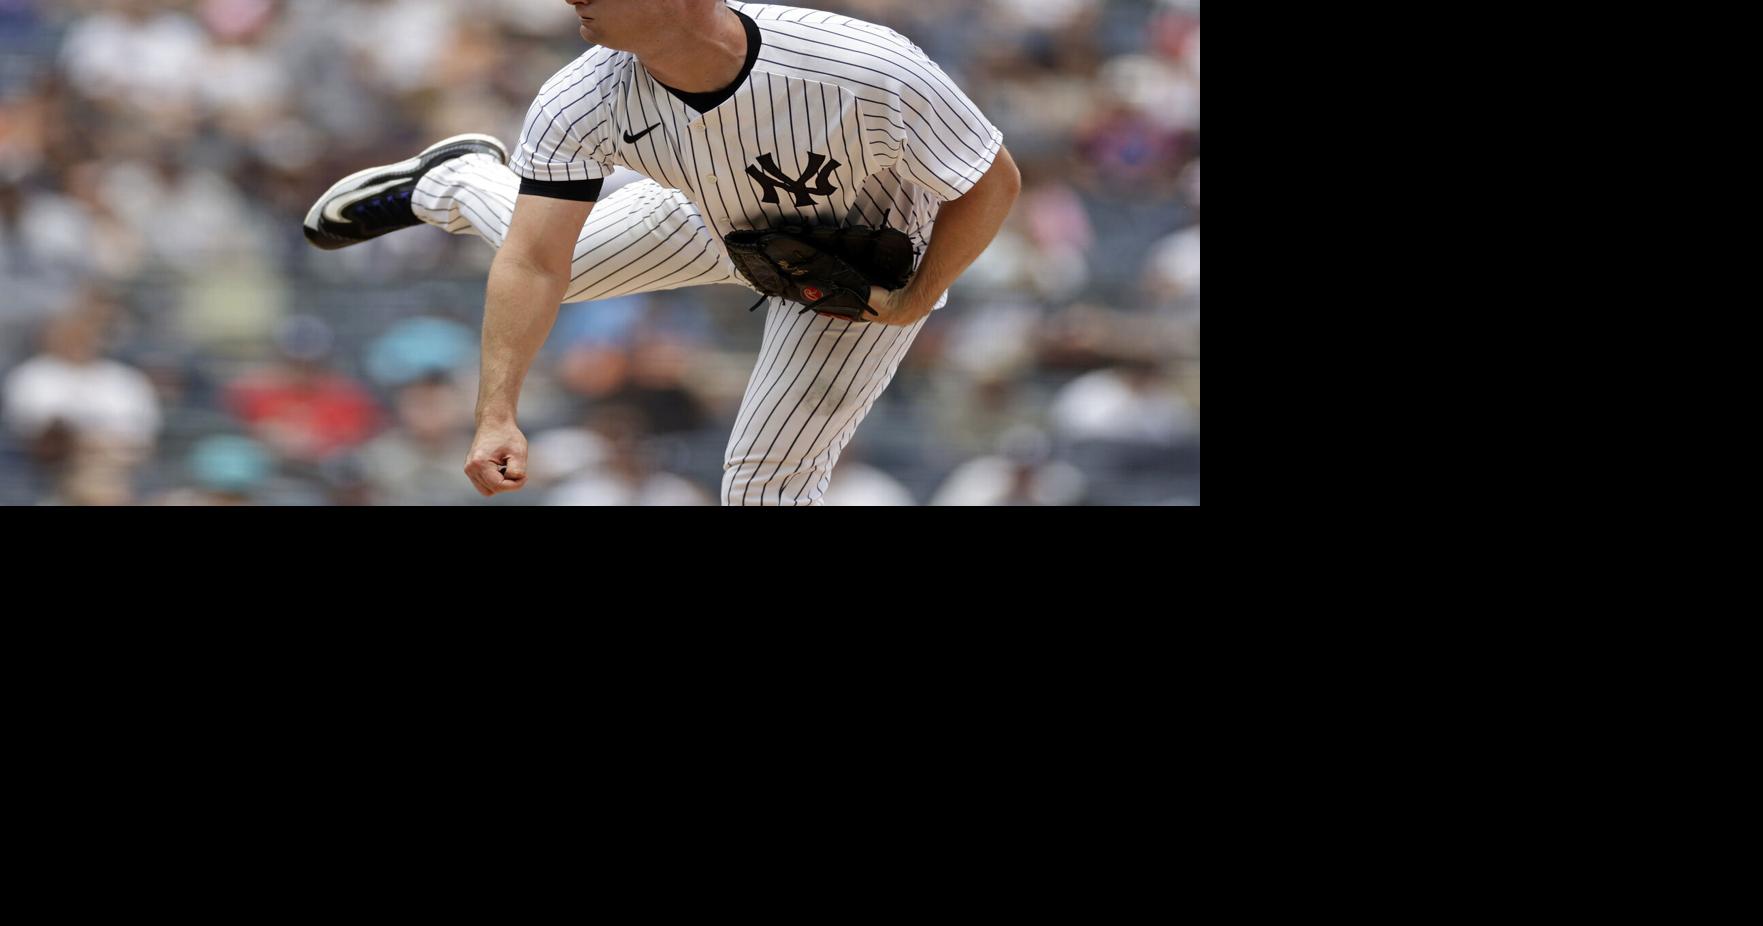 NY Yankees: Gerrit Cole dominant again in win over Philadelphia Phillies